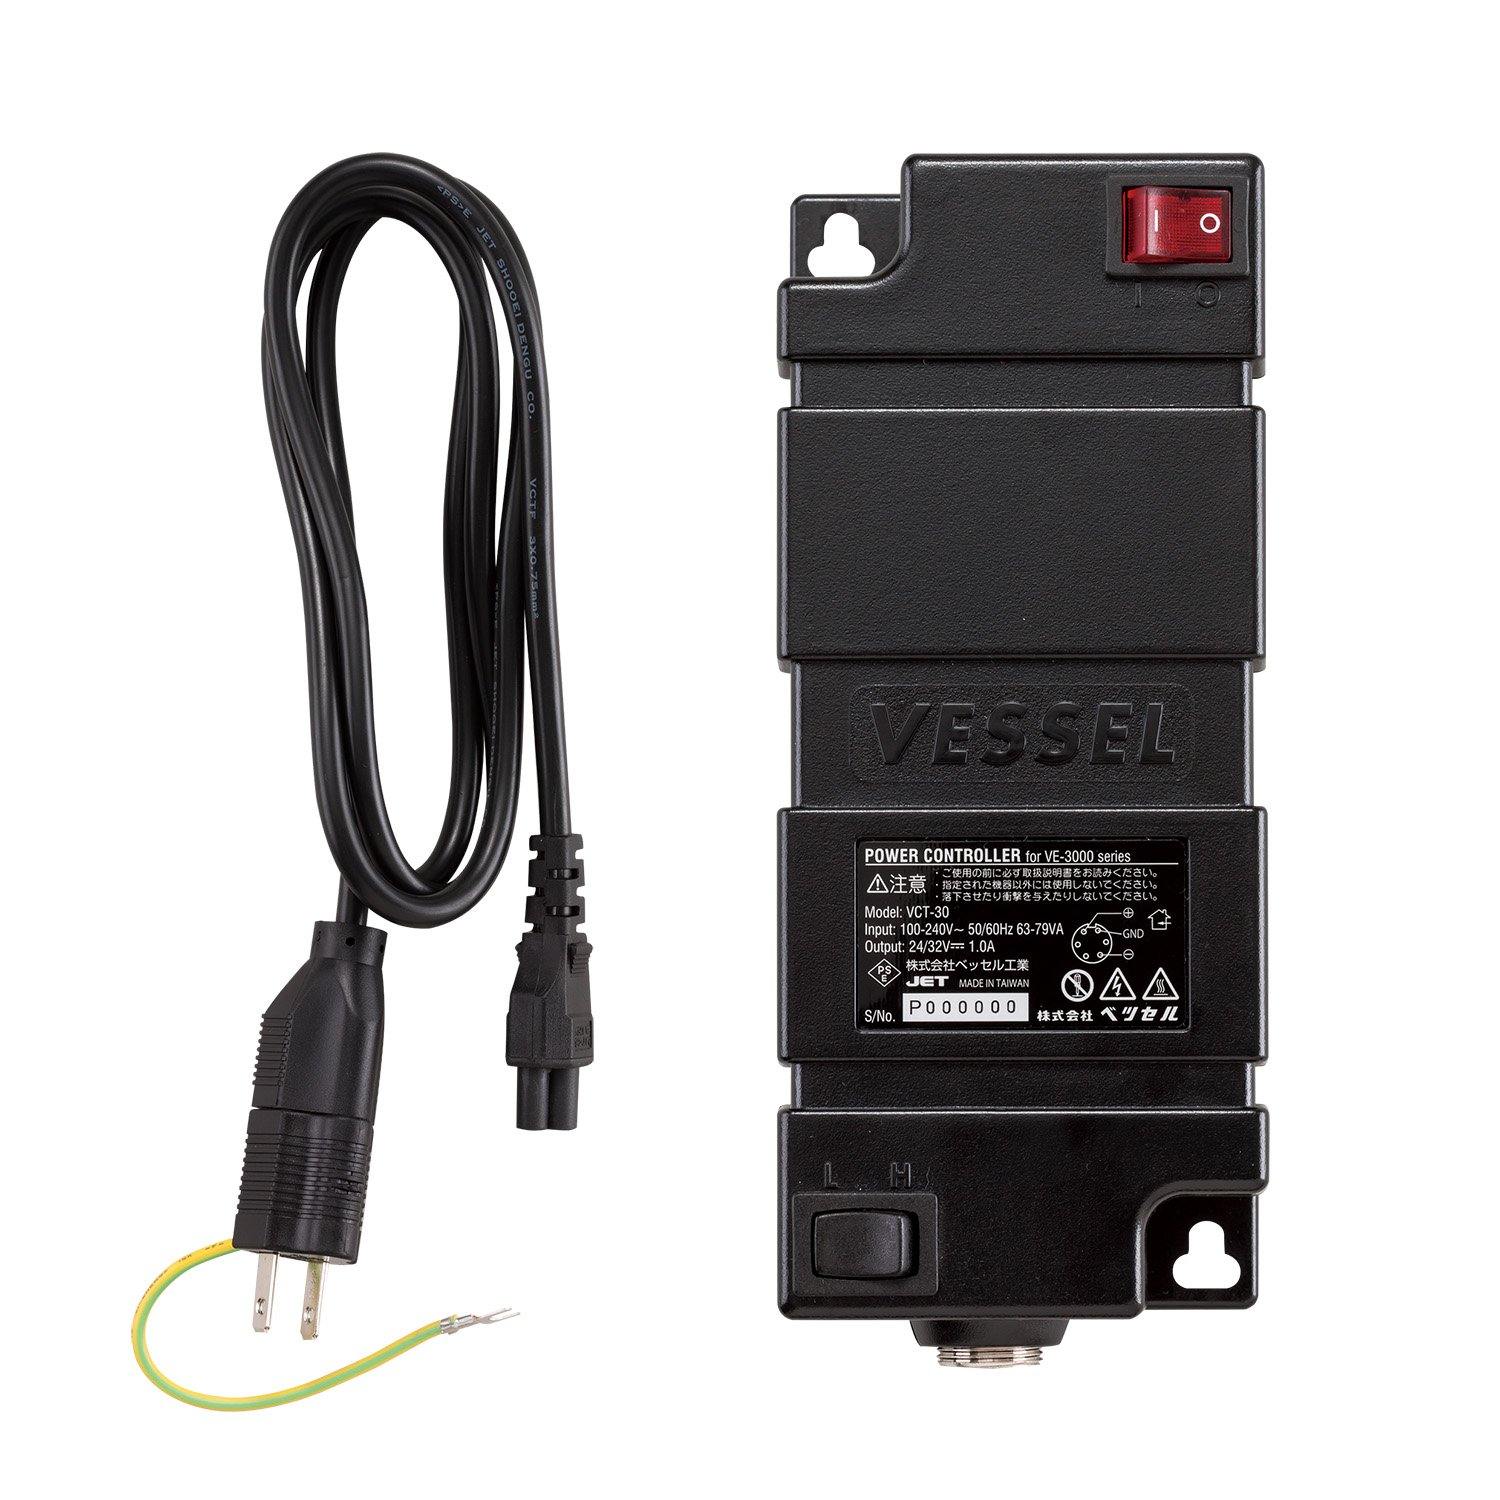 Vessel VE-3000 Electric Screwdriver accessories